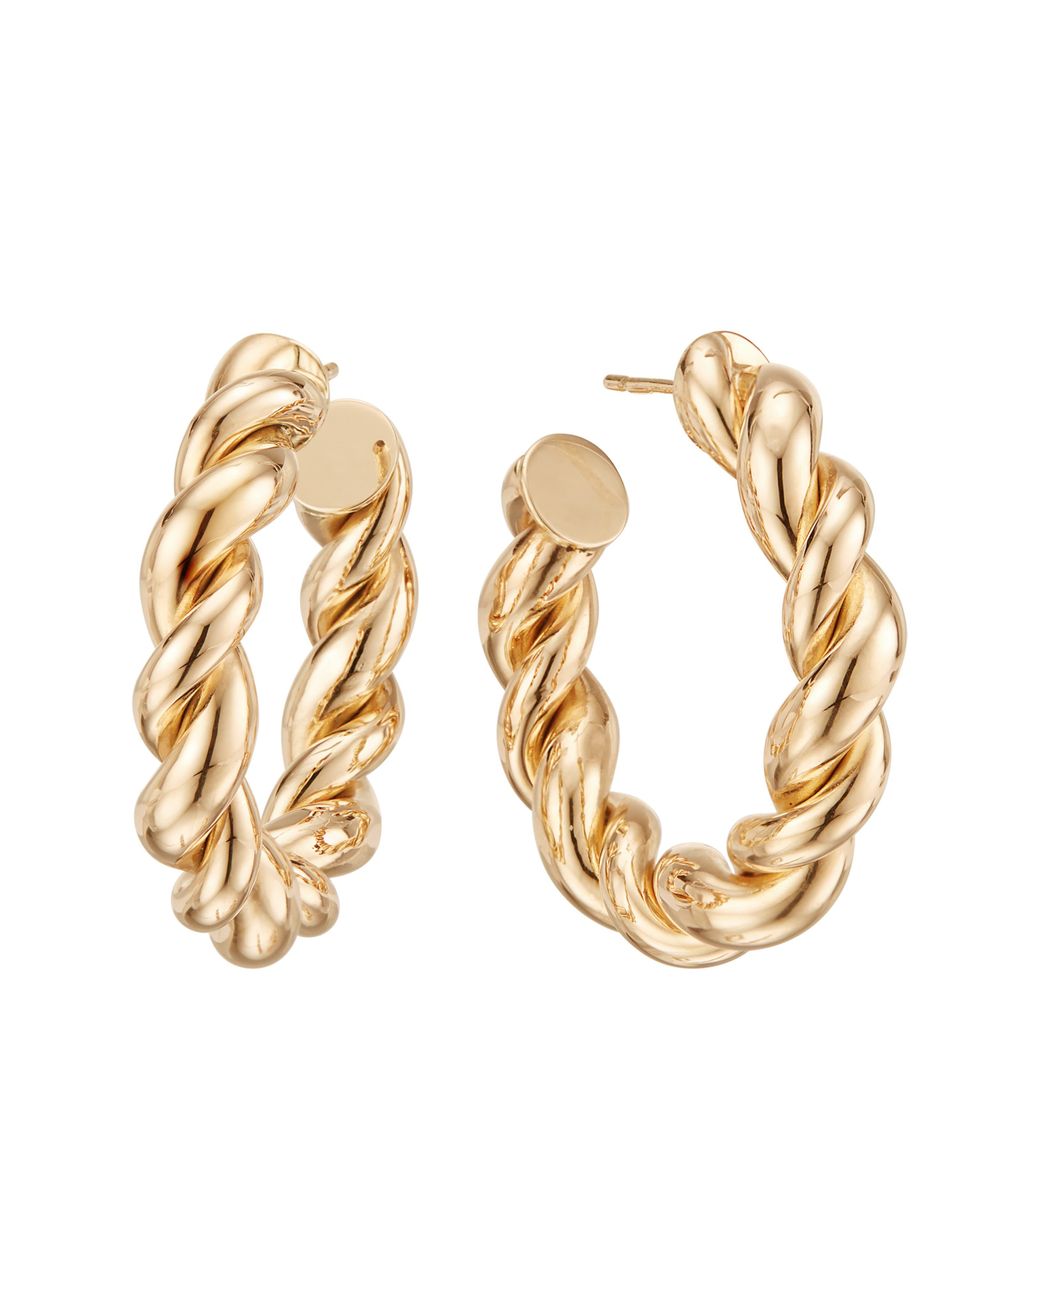 Lana Jewelry Braided Royale Hoop Earrings in Yellow Gold (Metallic) - Lyst